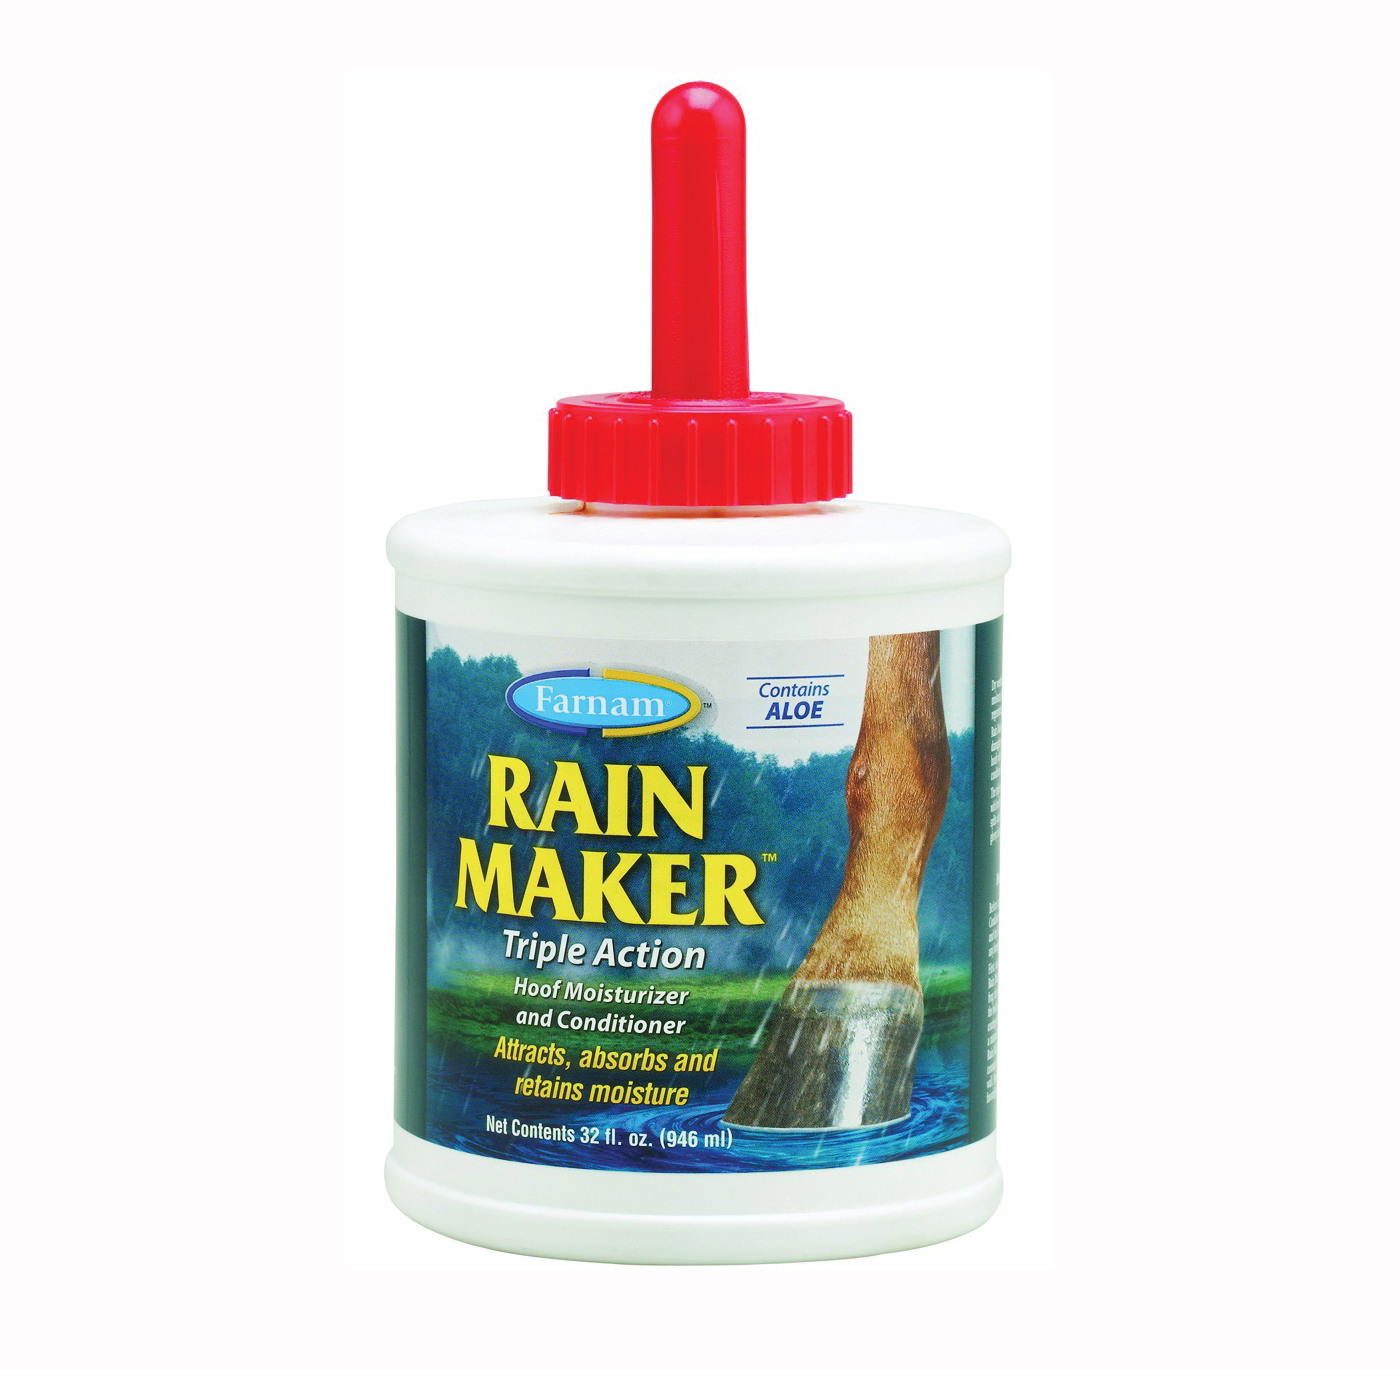 Farnam Rain Maker 39701 Hoof Moisturizer and Conditioner, Triple Action, 32 oz